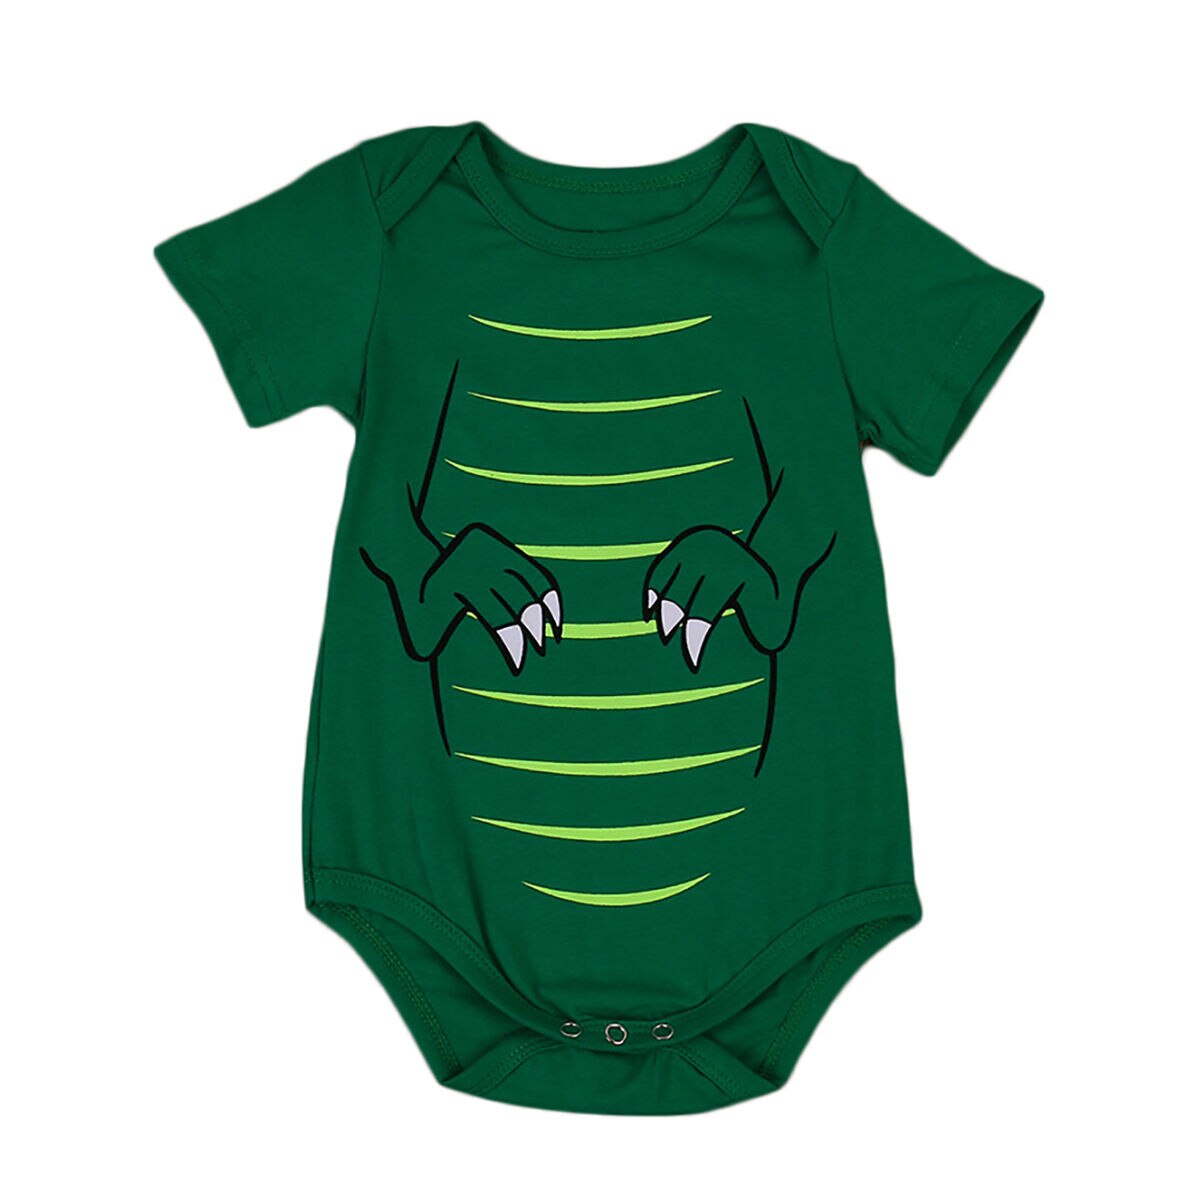 0-24M Dinosaur Newborn Infant Baby Boy Summer Short Sleeves Romper Bodysuit Causal Outfit - ebowsos